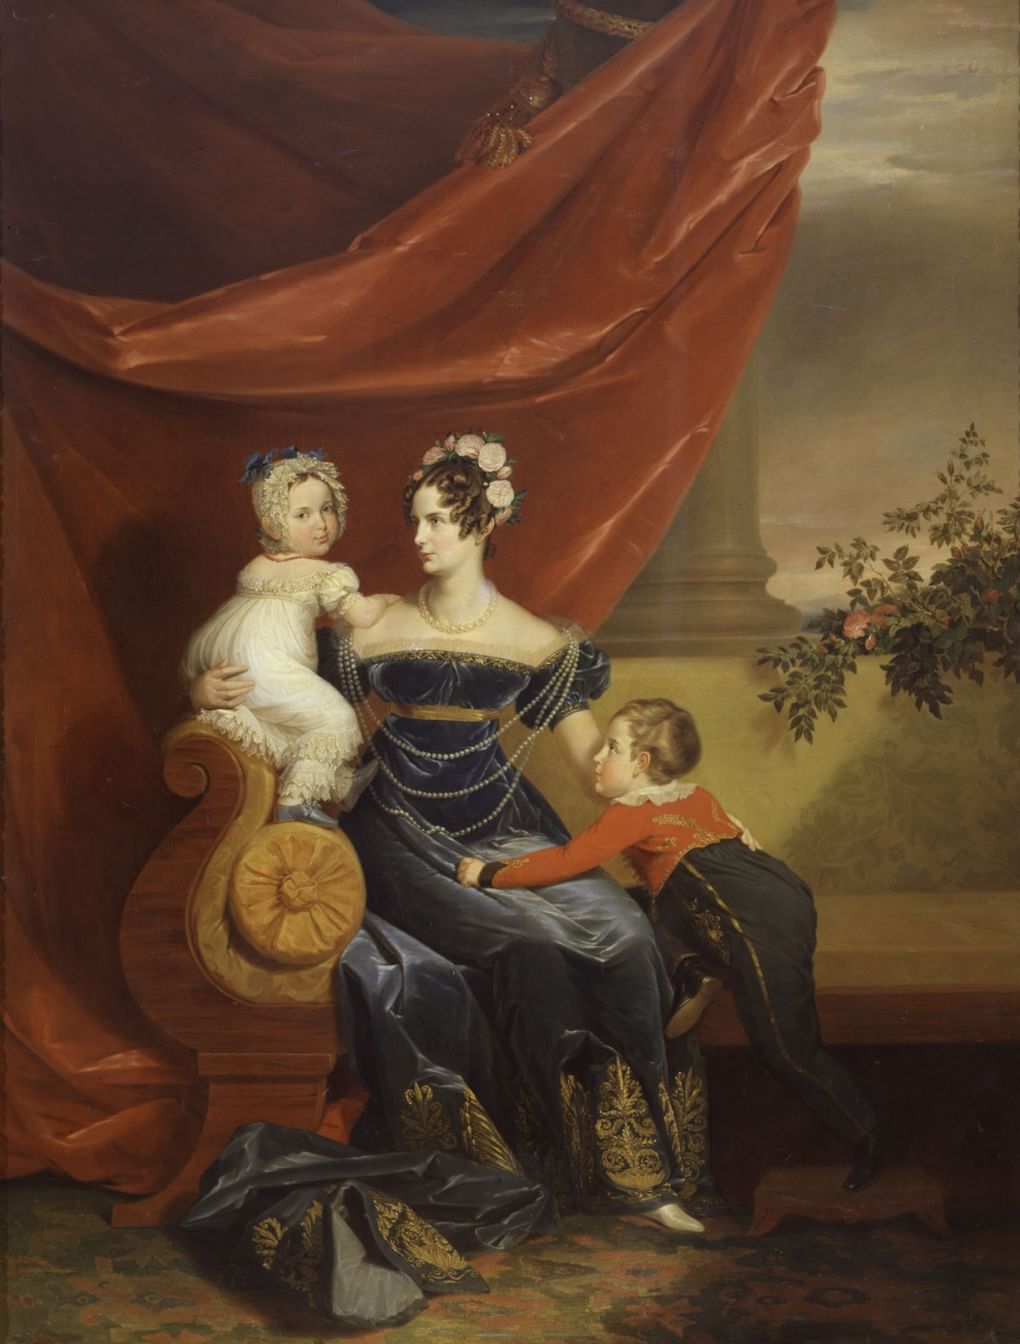 Дж. Доу. Александра Федоровна со старшими детьми — Александром и Марией. 1820-е. ГРМ